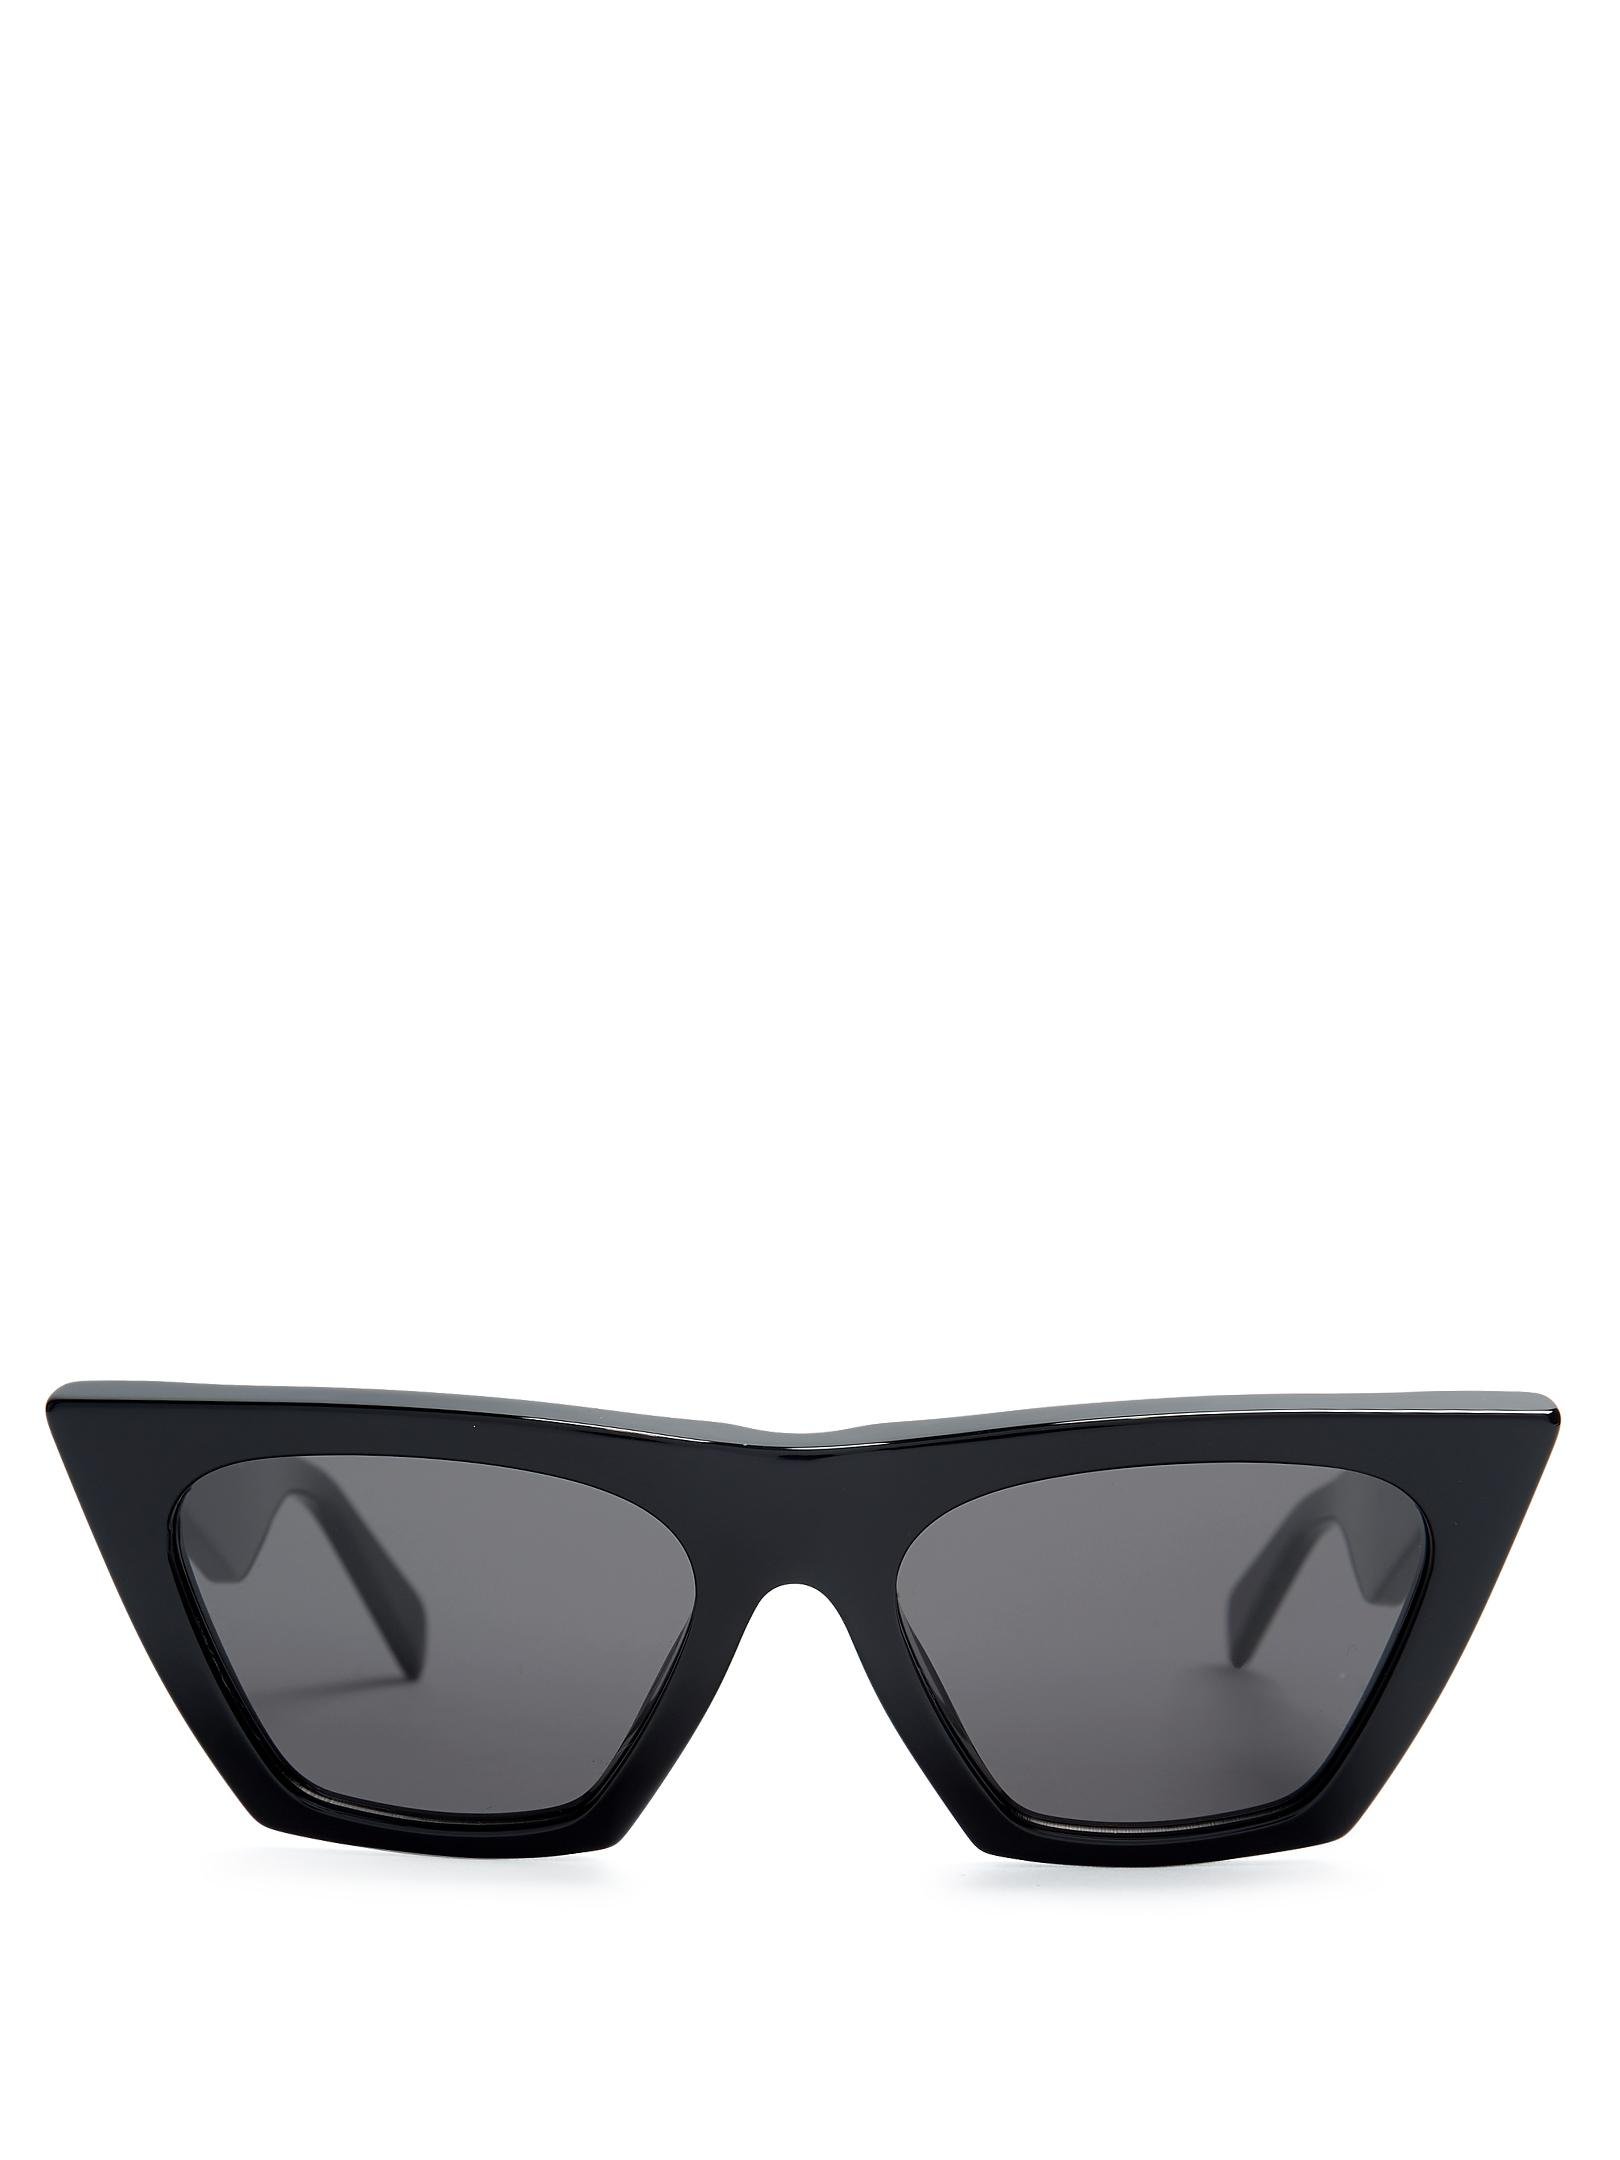 Celine Cat-eye Acetate Sunglasses in Black | Lyst